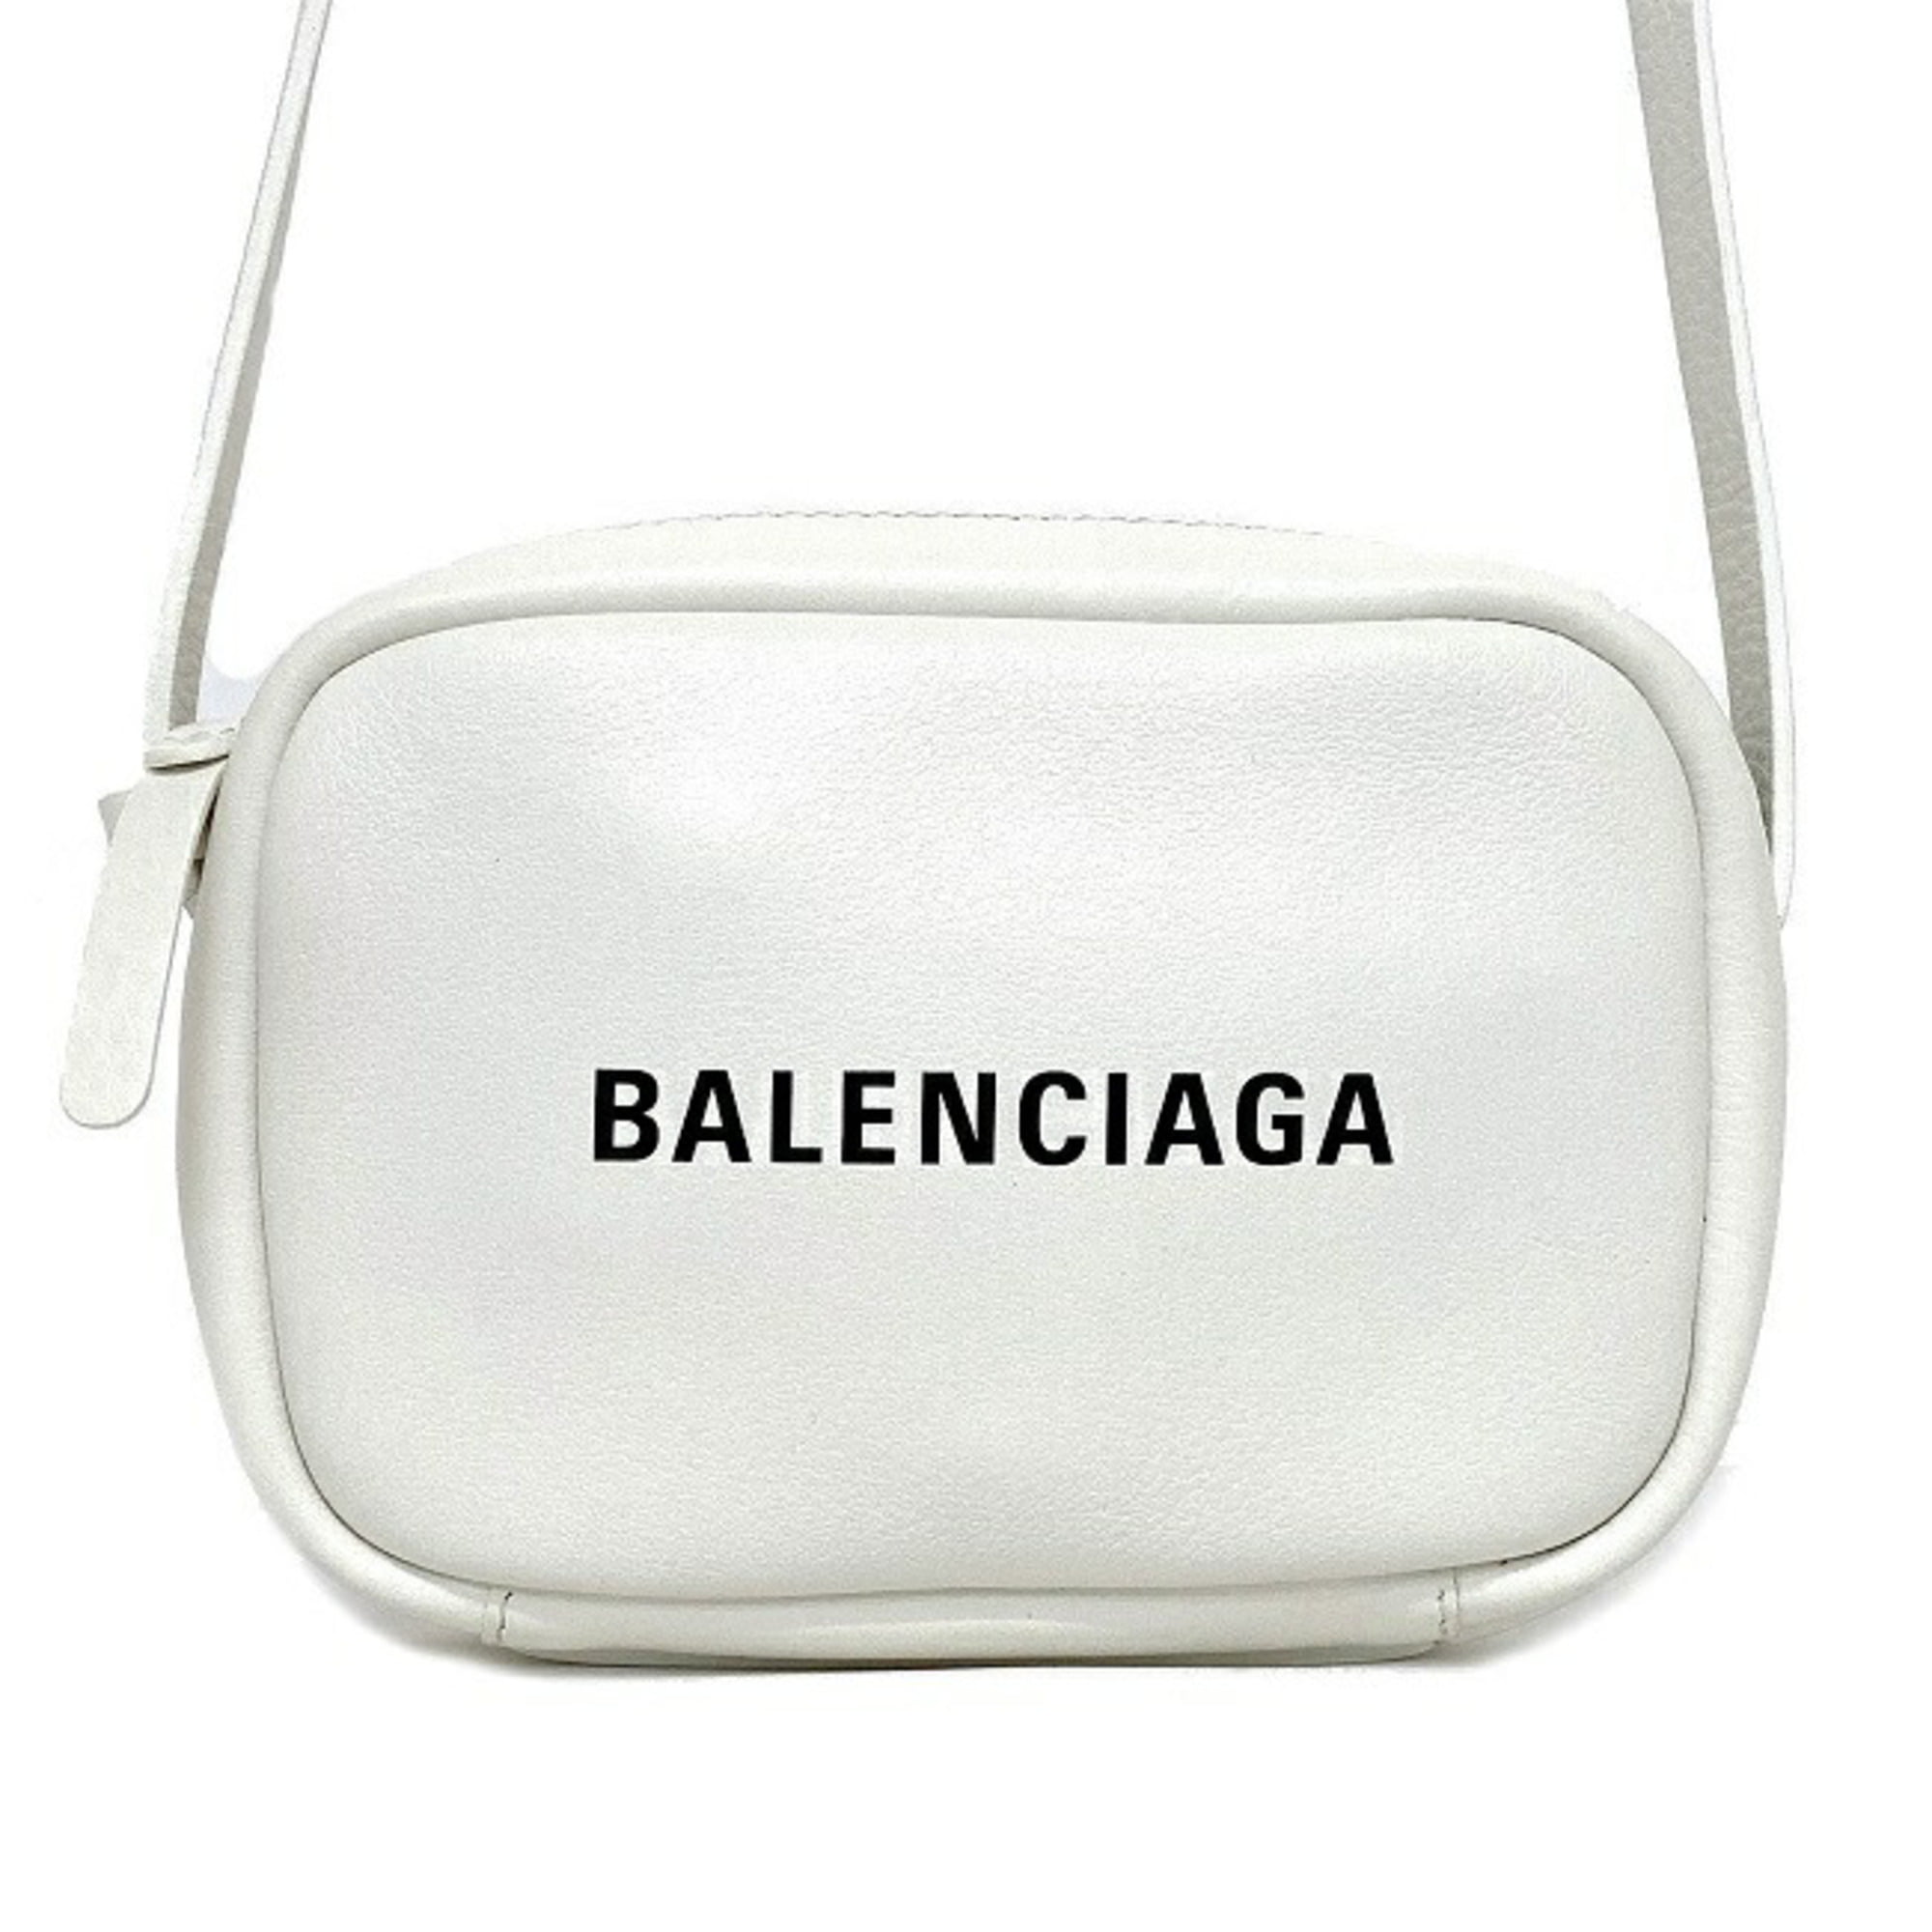 Authenticated Used Balenciaga Shoulder Bag White Black Everyday